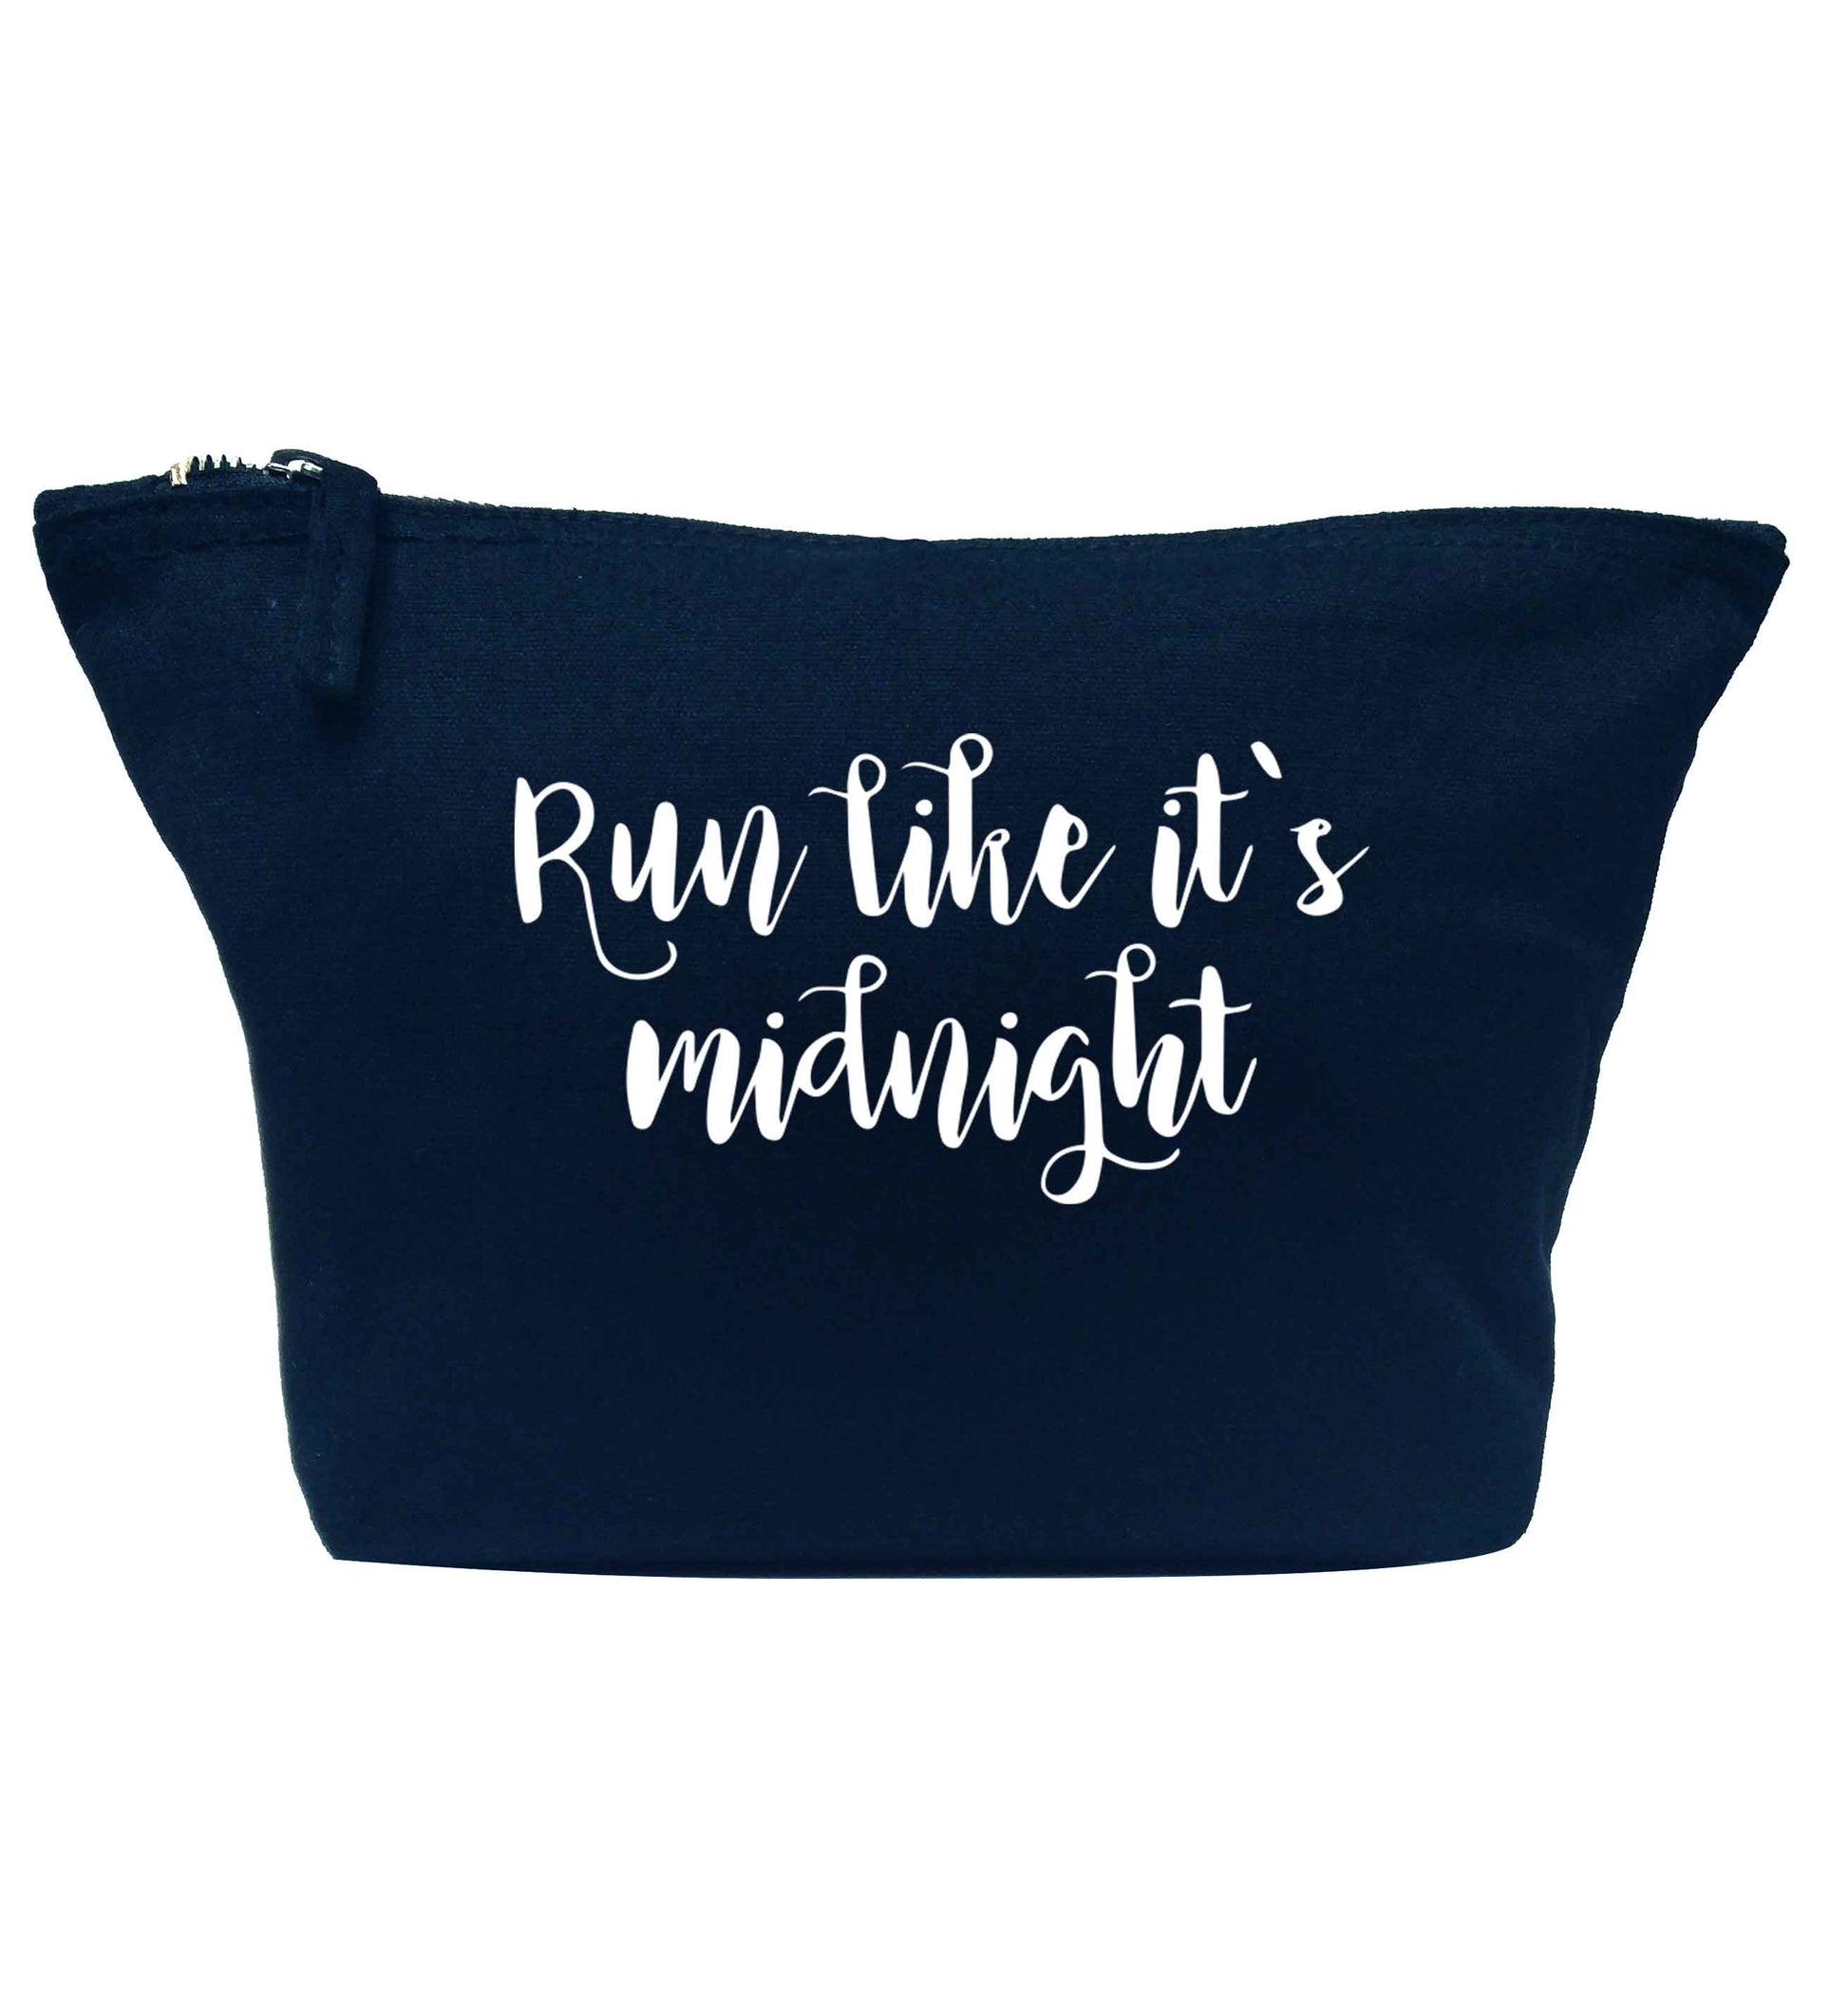 Run like it's midnight navy makeup bag